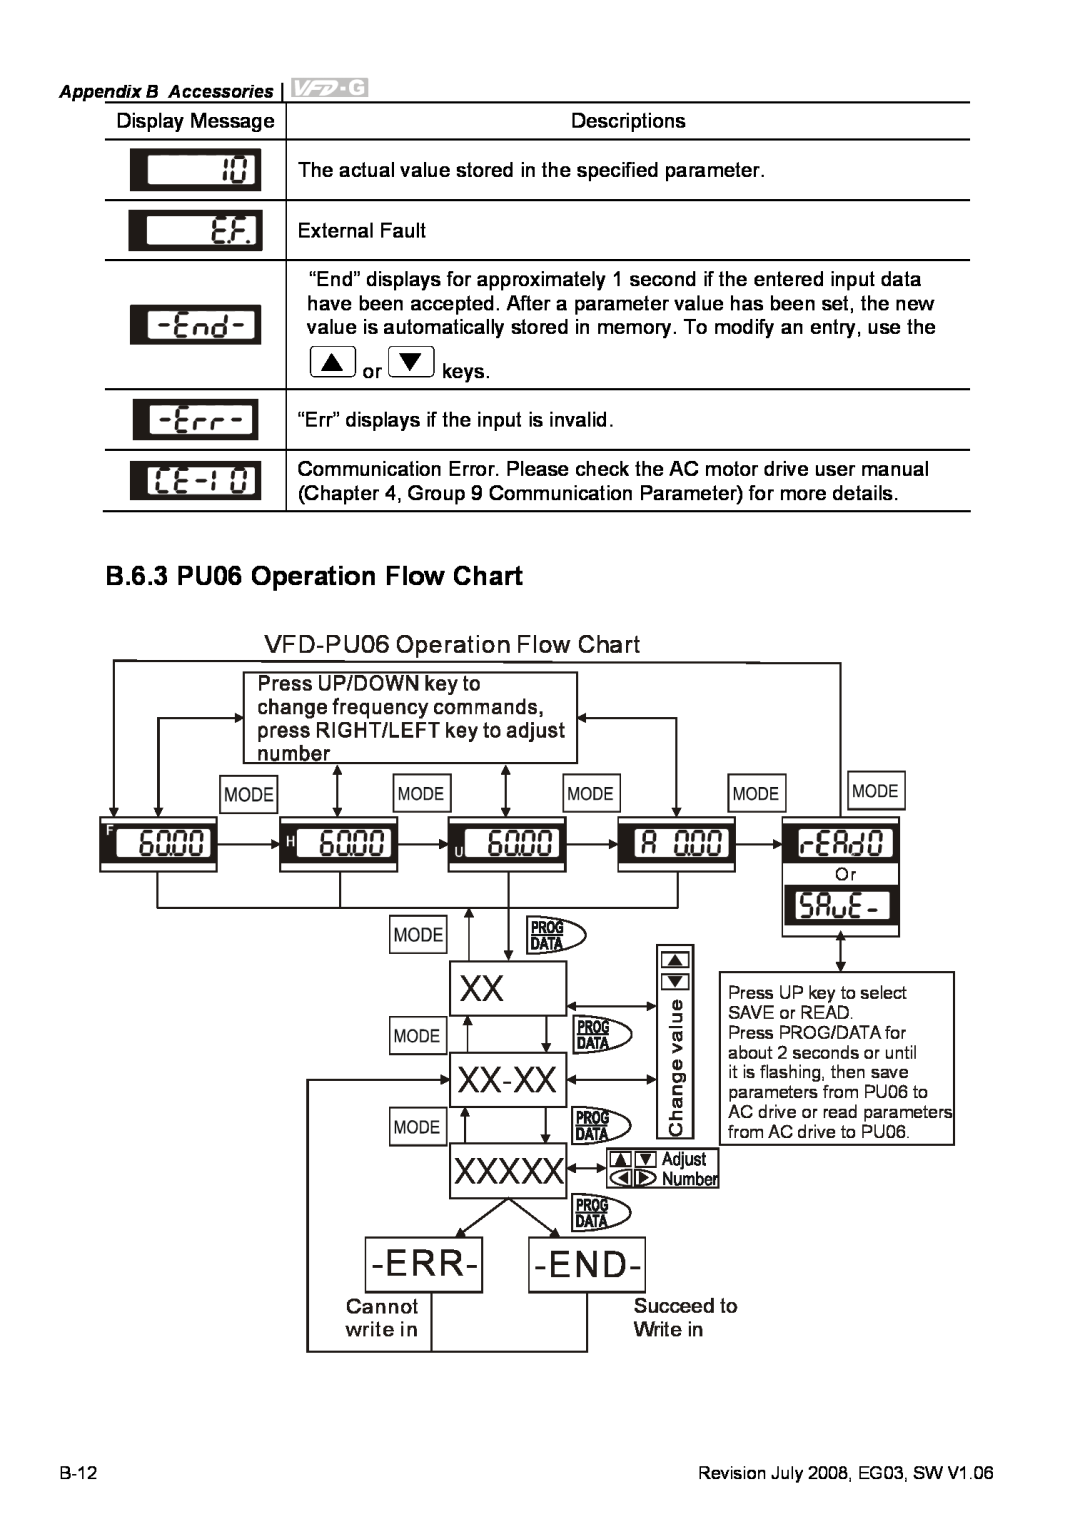 Delta Electronics VFD-G B.6.3 PU06 Operation Flow Chart, Xx-Xx, Xxxxx -Err- -End, VFD-PU06 Operation Flow Chart, Cannot 